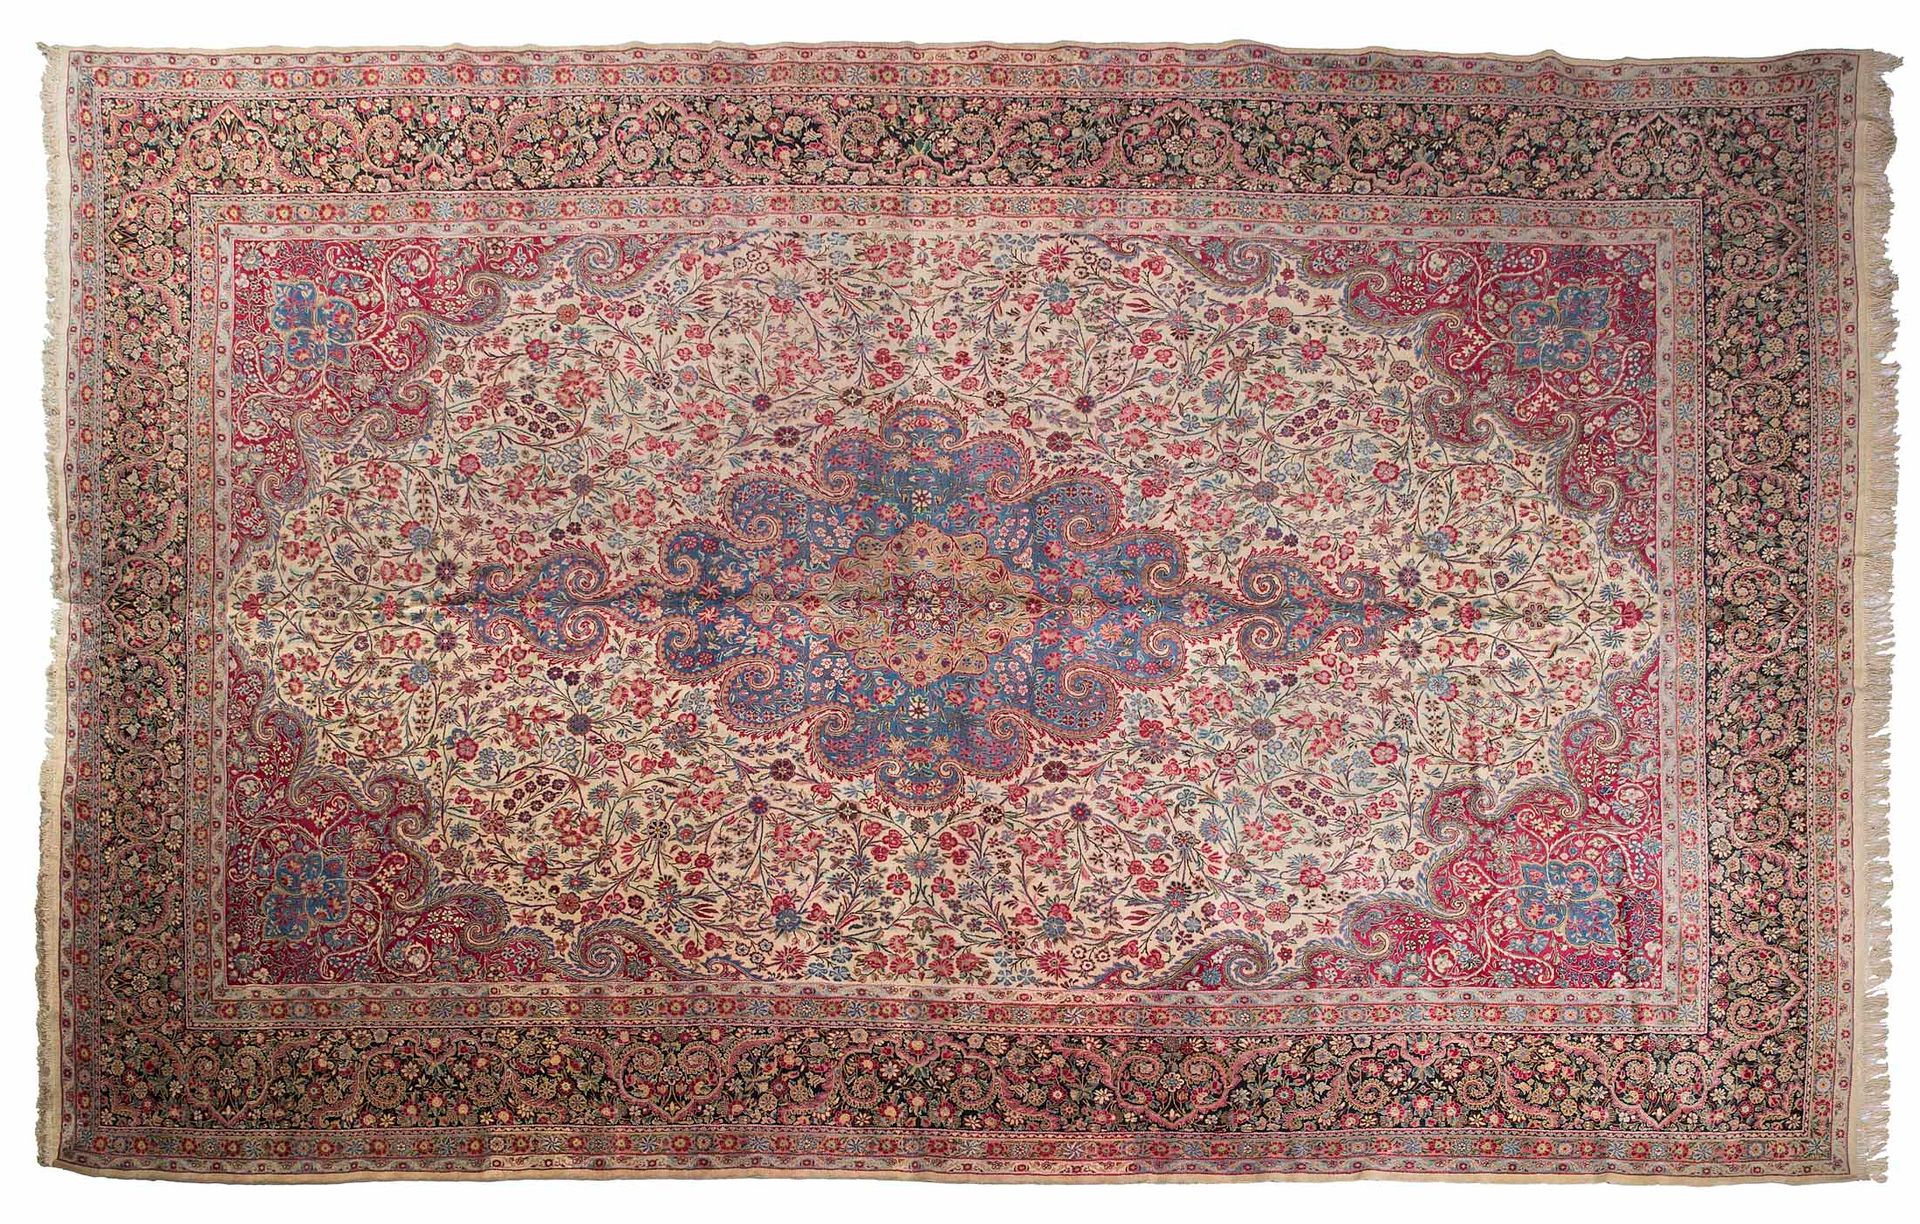 Null 非常重要的基尔曼地毯（波斯），20世纪初

尺寸：670 x 415厘米。

技术特点 : 羊毛天鹅绒，棉质底板。

一片起伏的长方形象牙地，覆盖着许&hellip;